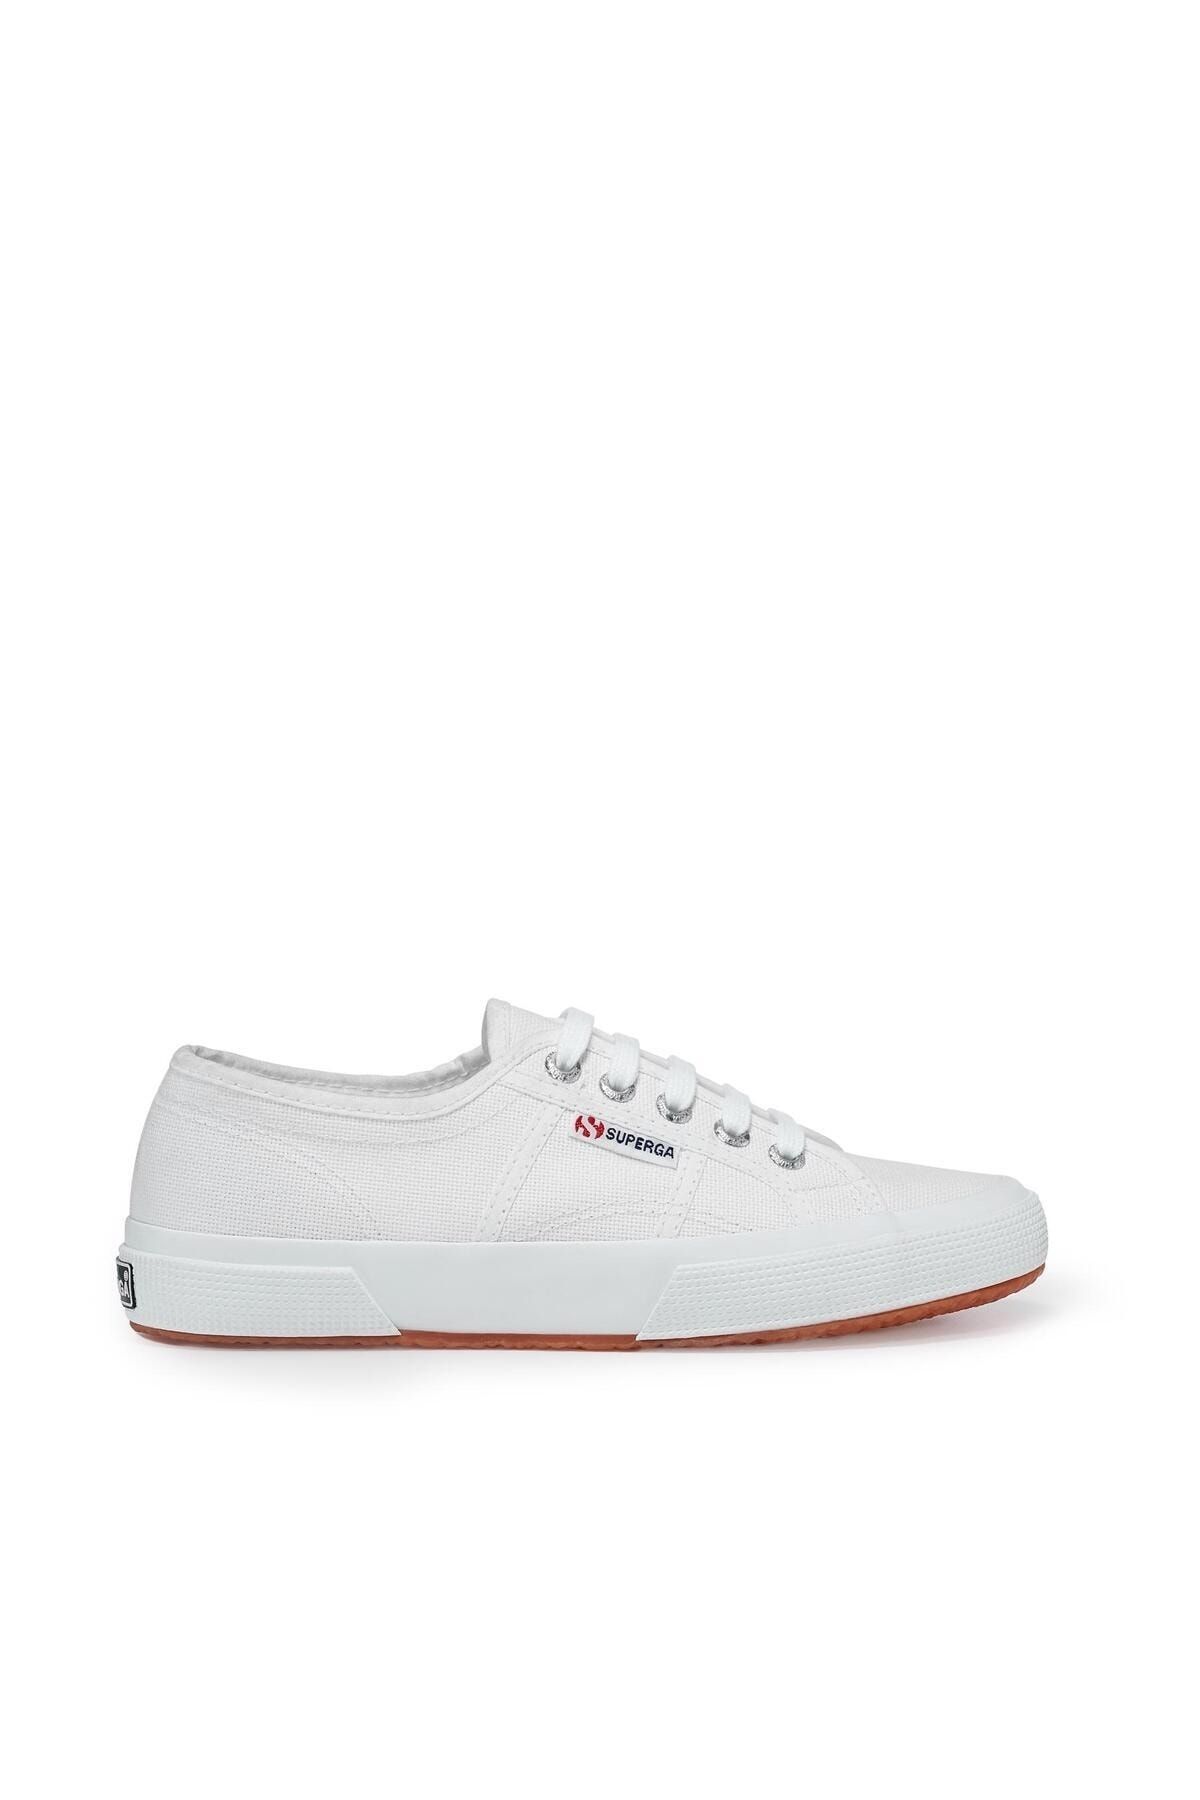 Superga 2750-cotu Classic Unisex Beyaz Bileksiz Sneaker